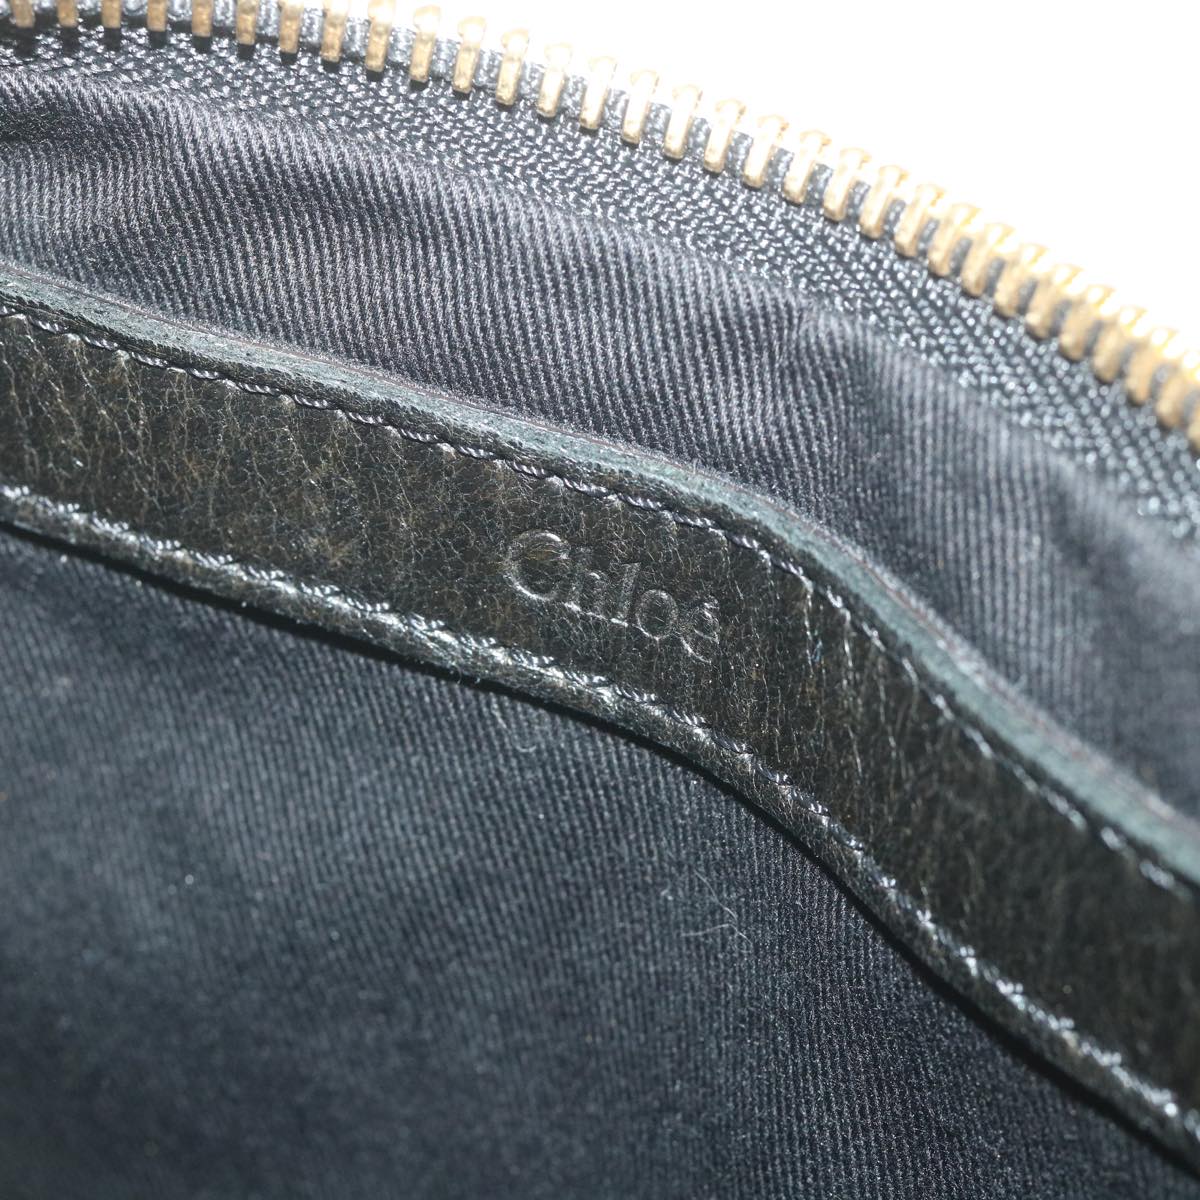 Chloe Etel Hand Bag Leather 2way Black 03-11-50 Auth bs10193